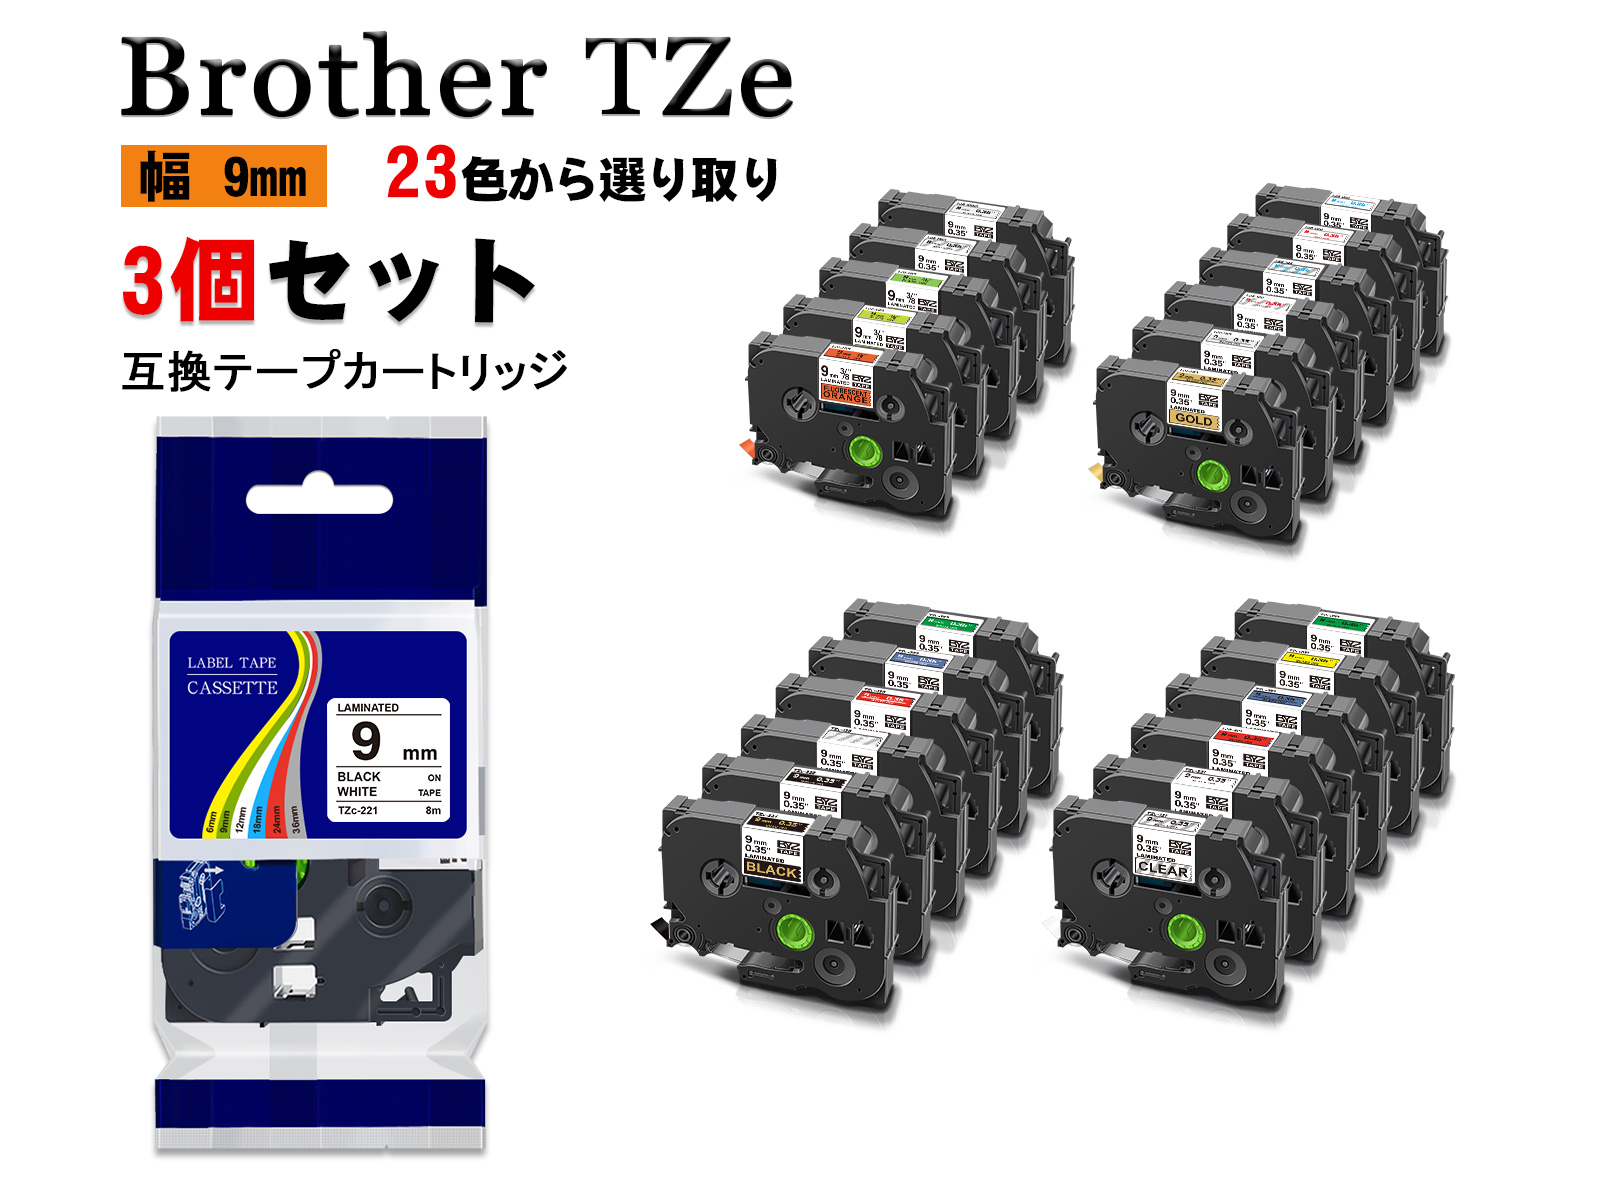 TZeテープ TZeシリーズ お名前シール 幅 9mm 全 2020 新作 7色 名前シール Brother ブラザー 8m 23色 テプラテープ 3個セット 長さ マイラベル ピータッチキューブ用 購買 互換 2年保証可能